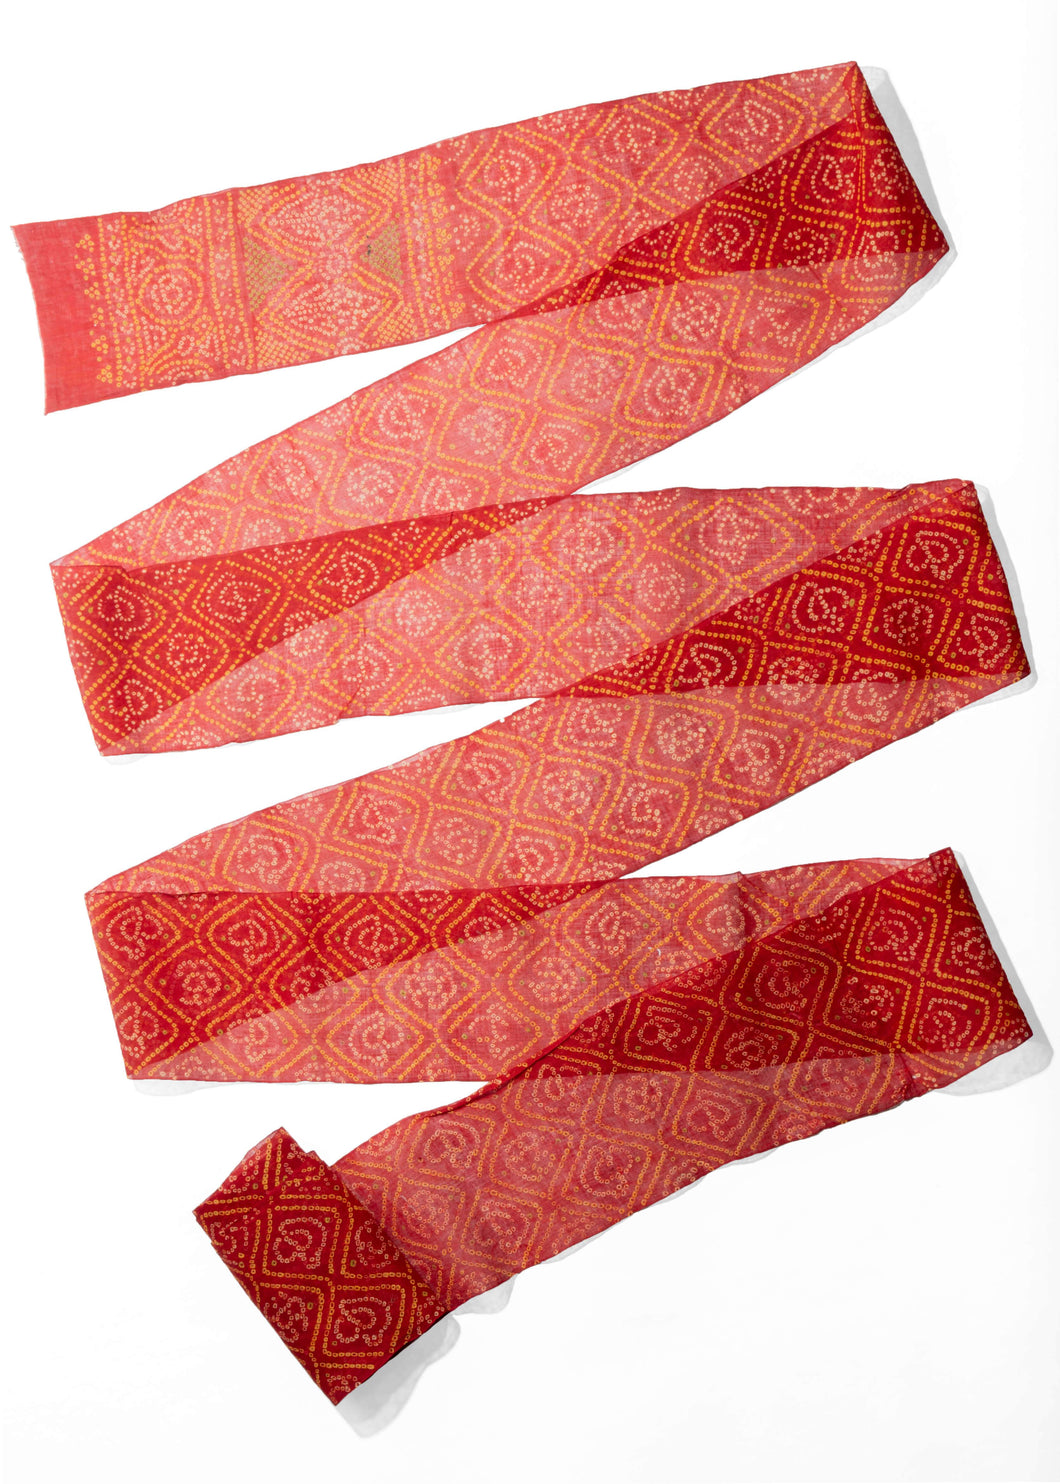 Gujarti Turban, long resist-dyed tie-dyed cotton cloth in burnt umber orange yellow white